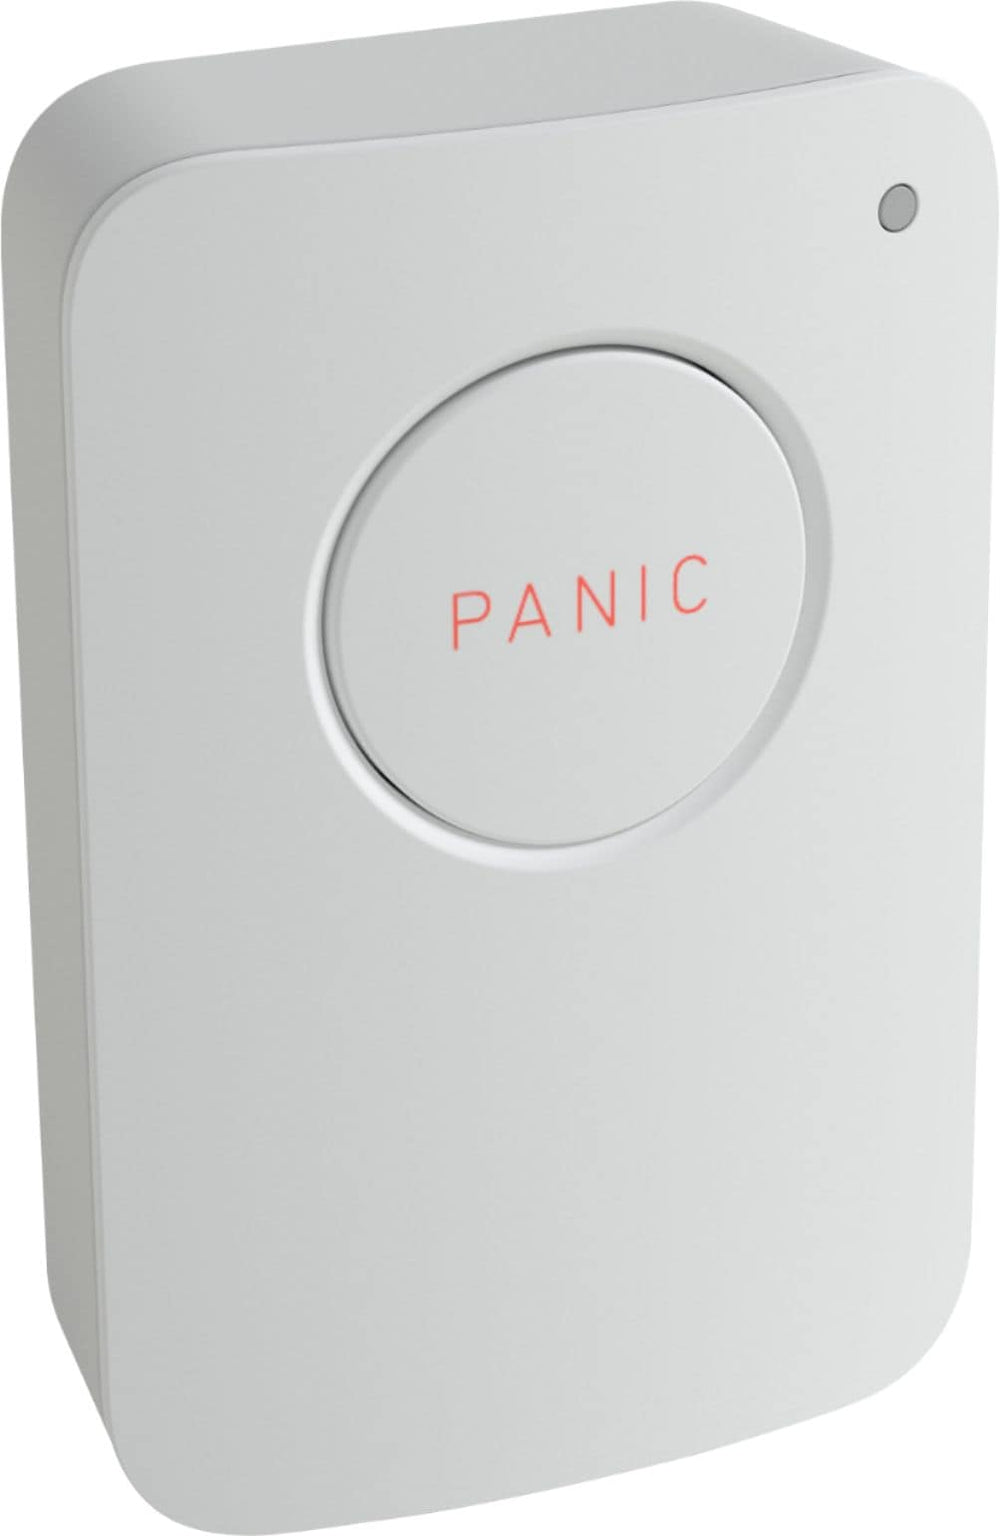 SimpliSafe - Panic Button - White_1